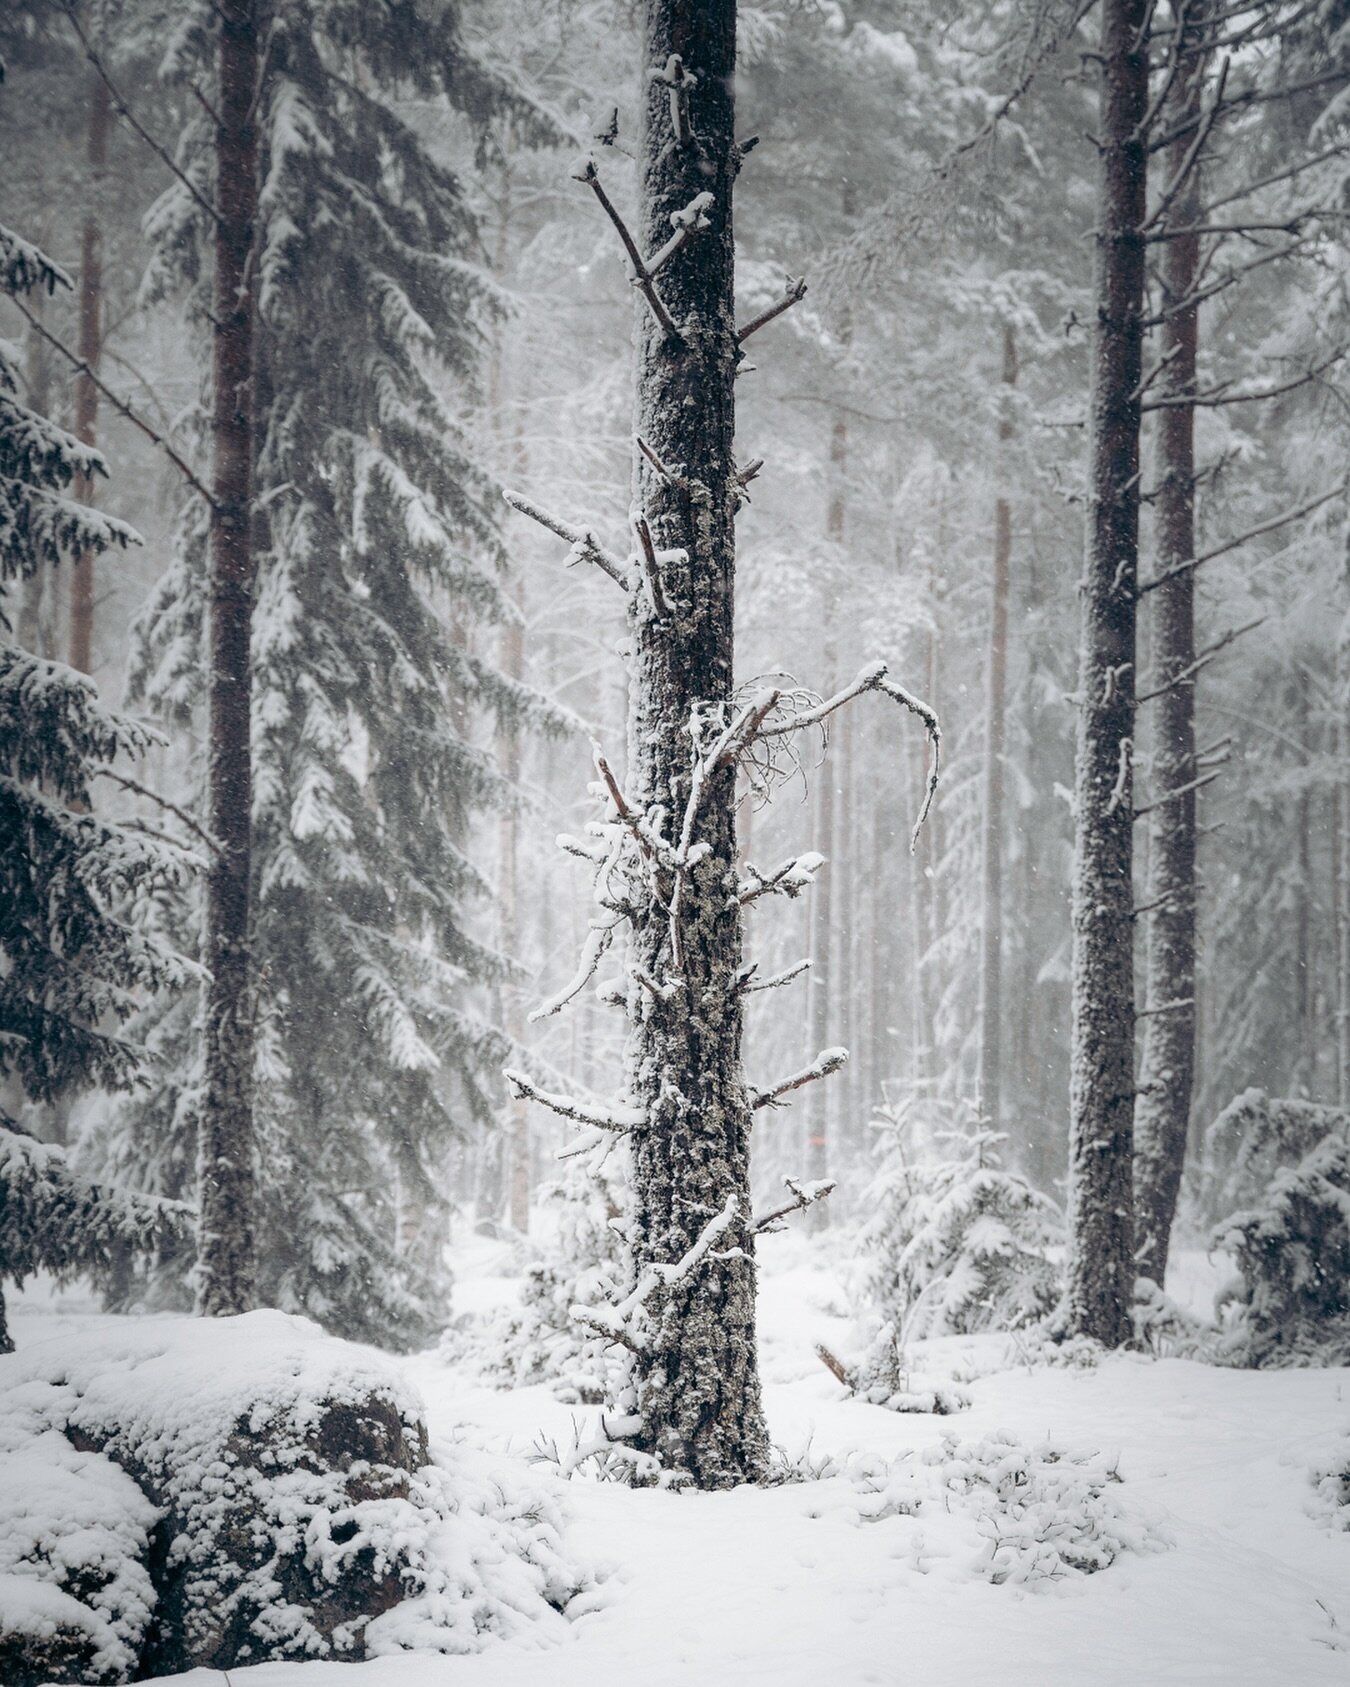 Winter hath returneth

.
.

#instadalarna #canonnordic #natures_moods #atmospheric #landscapephotography #snowyforest #darkforest #sweden #folkscenery #landscape_lovers #moodynature #natures_moods #moodyvibeshots #moody_tones #moodygrams #moodylandsc